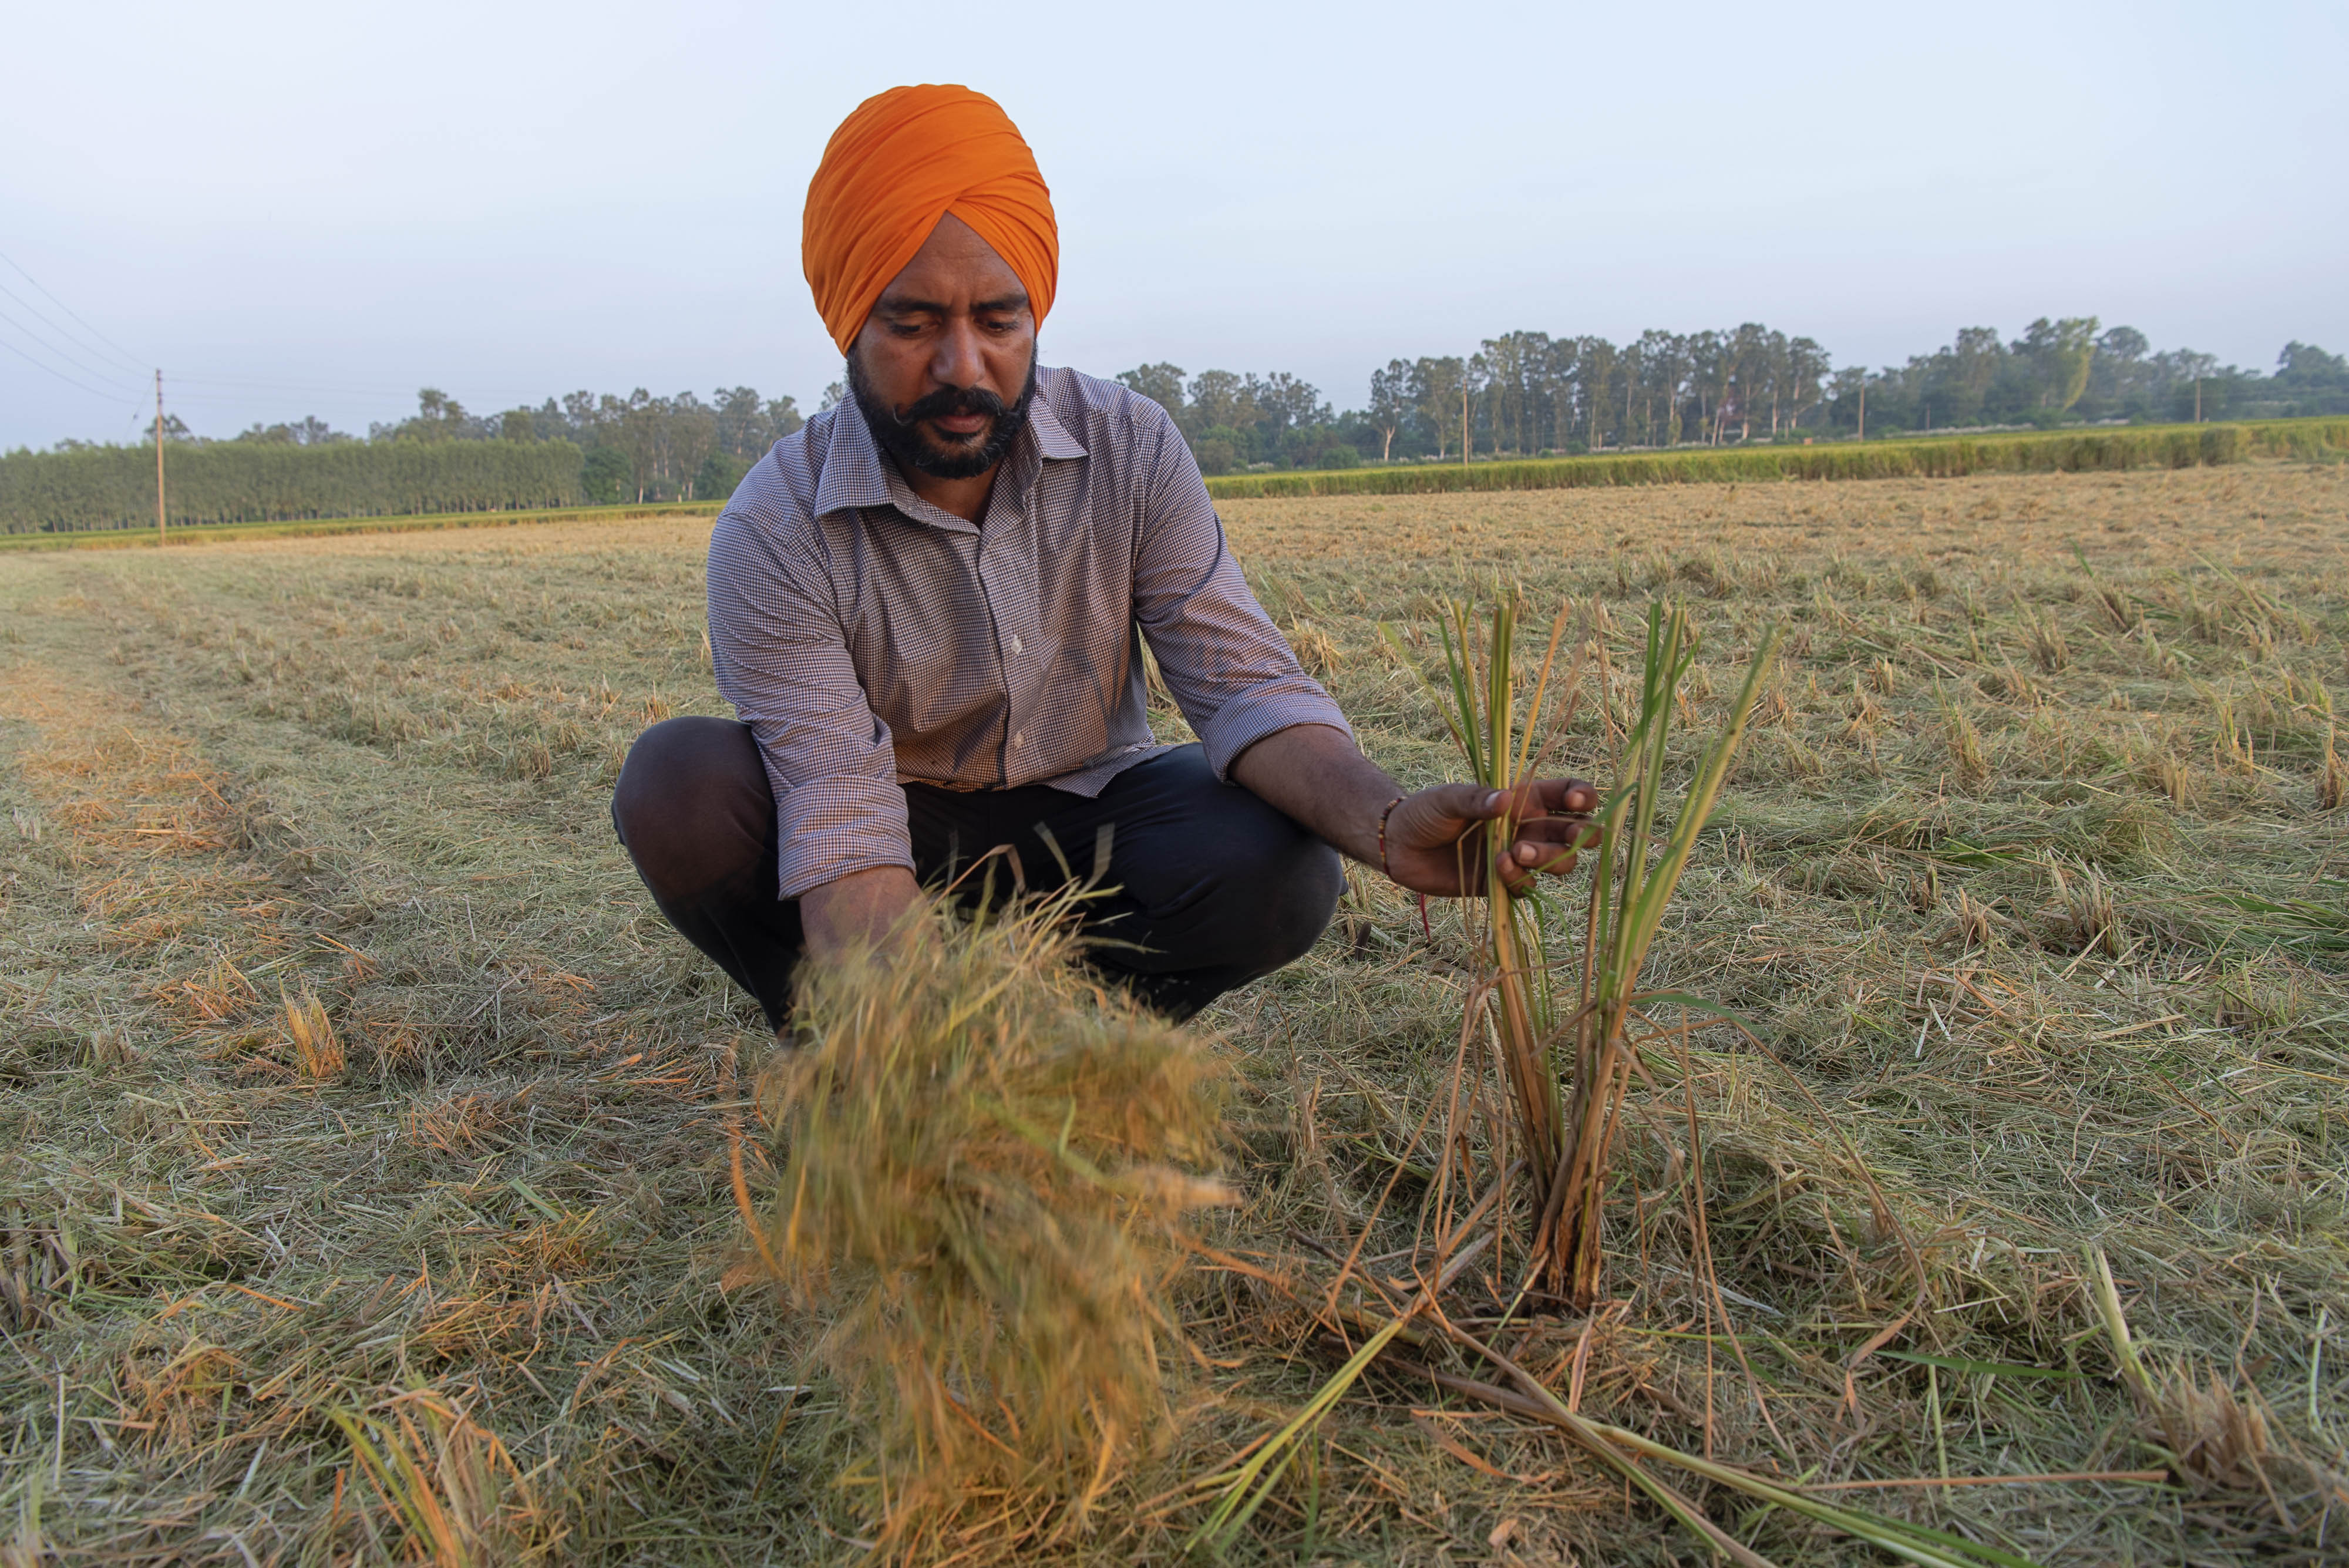 Gurdeep Singh examines the crop stubble in his field.